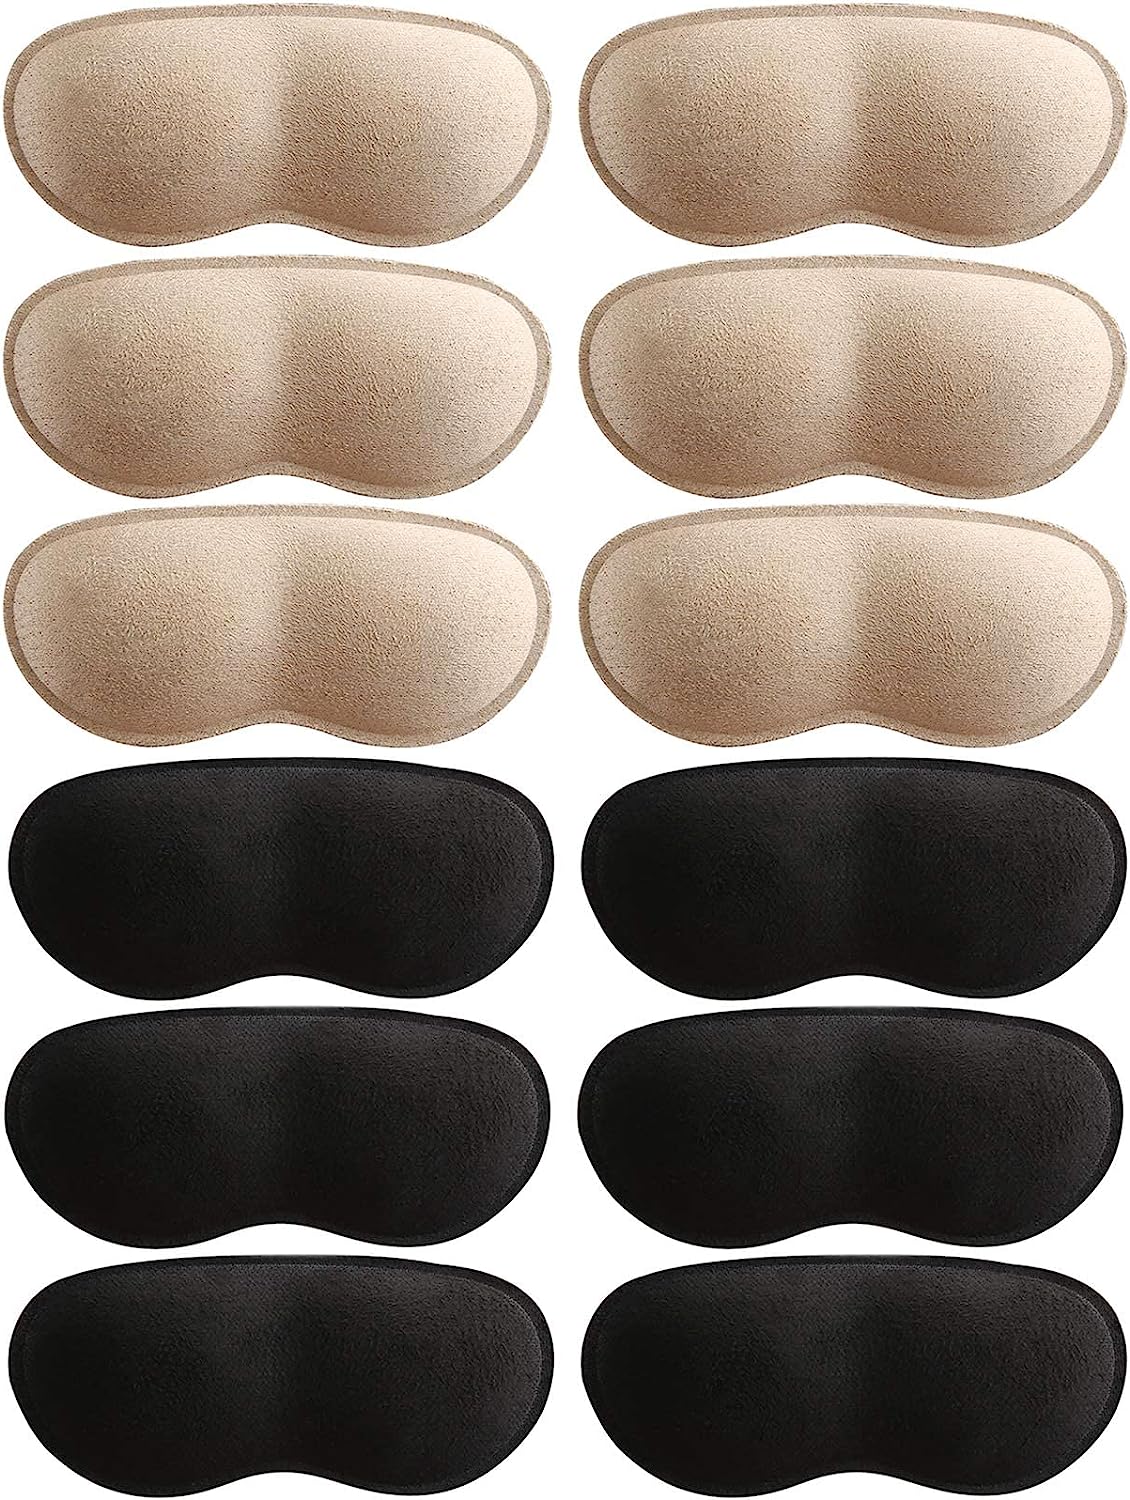 6 Pairs Heel Cushion Pads, Super Comfort Microsuede [...]